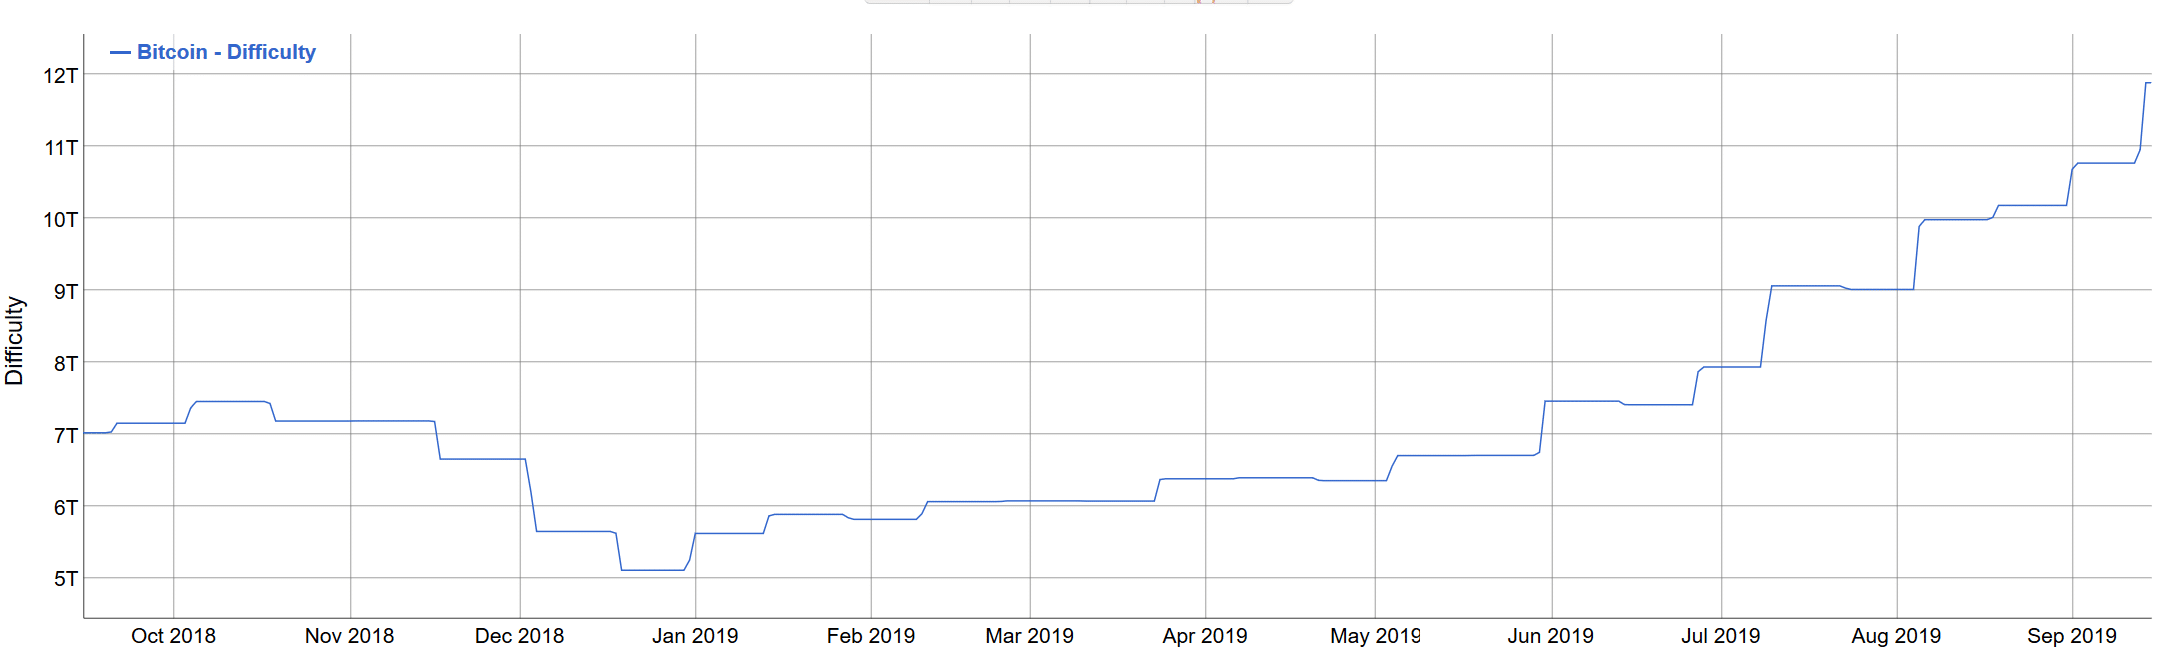 bitcoin hashrate record